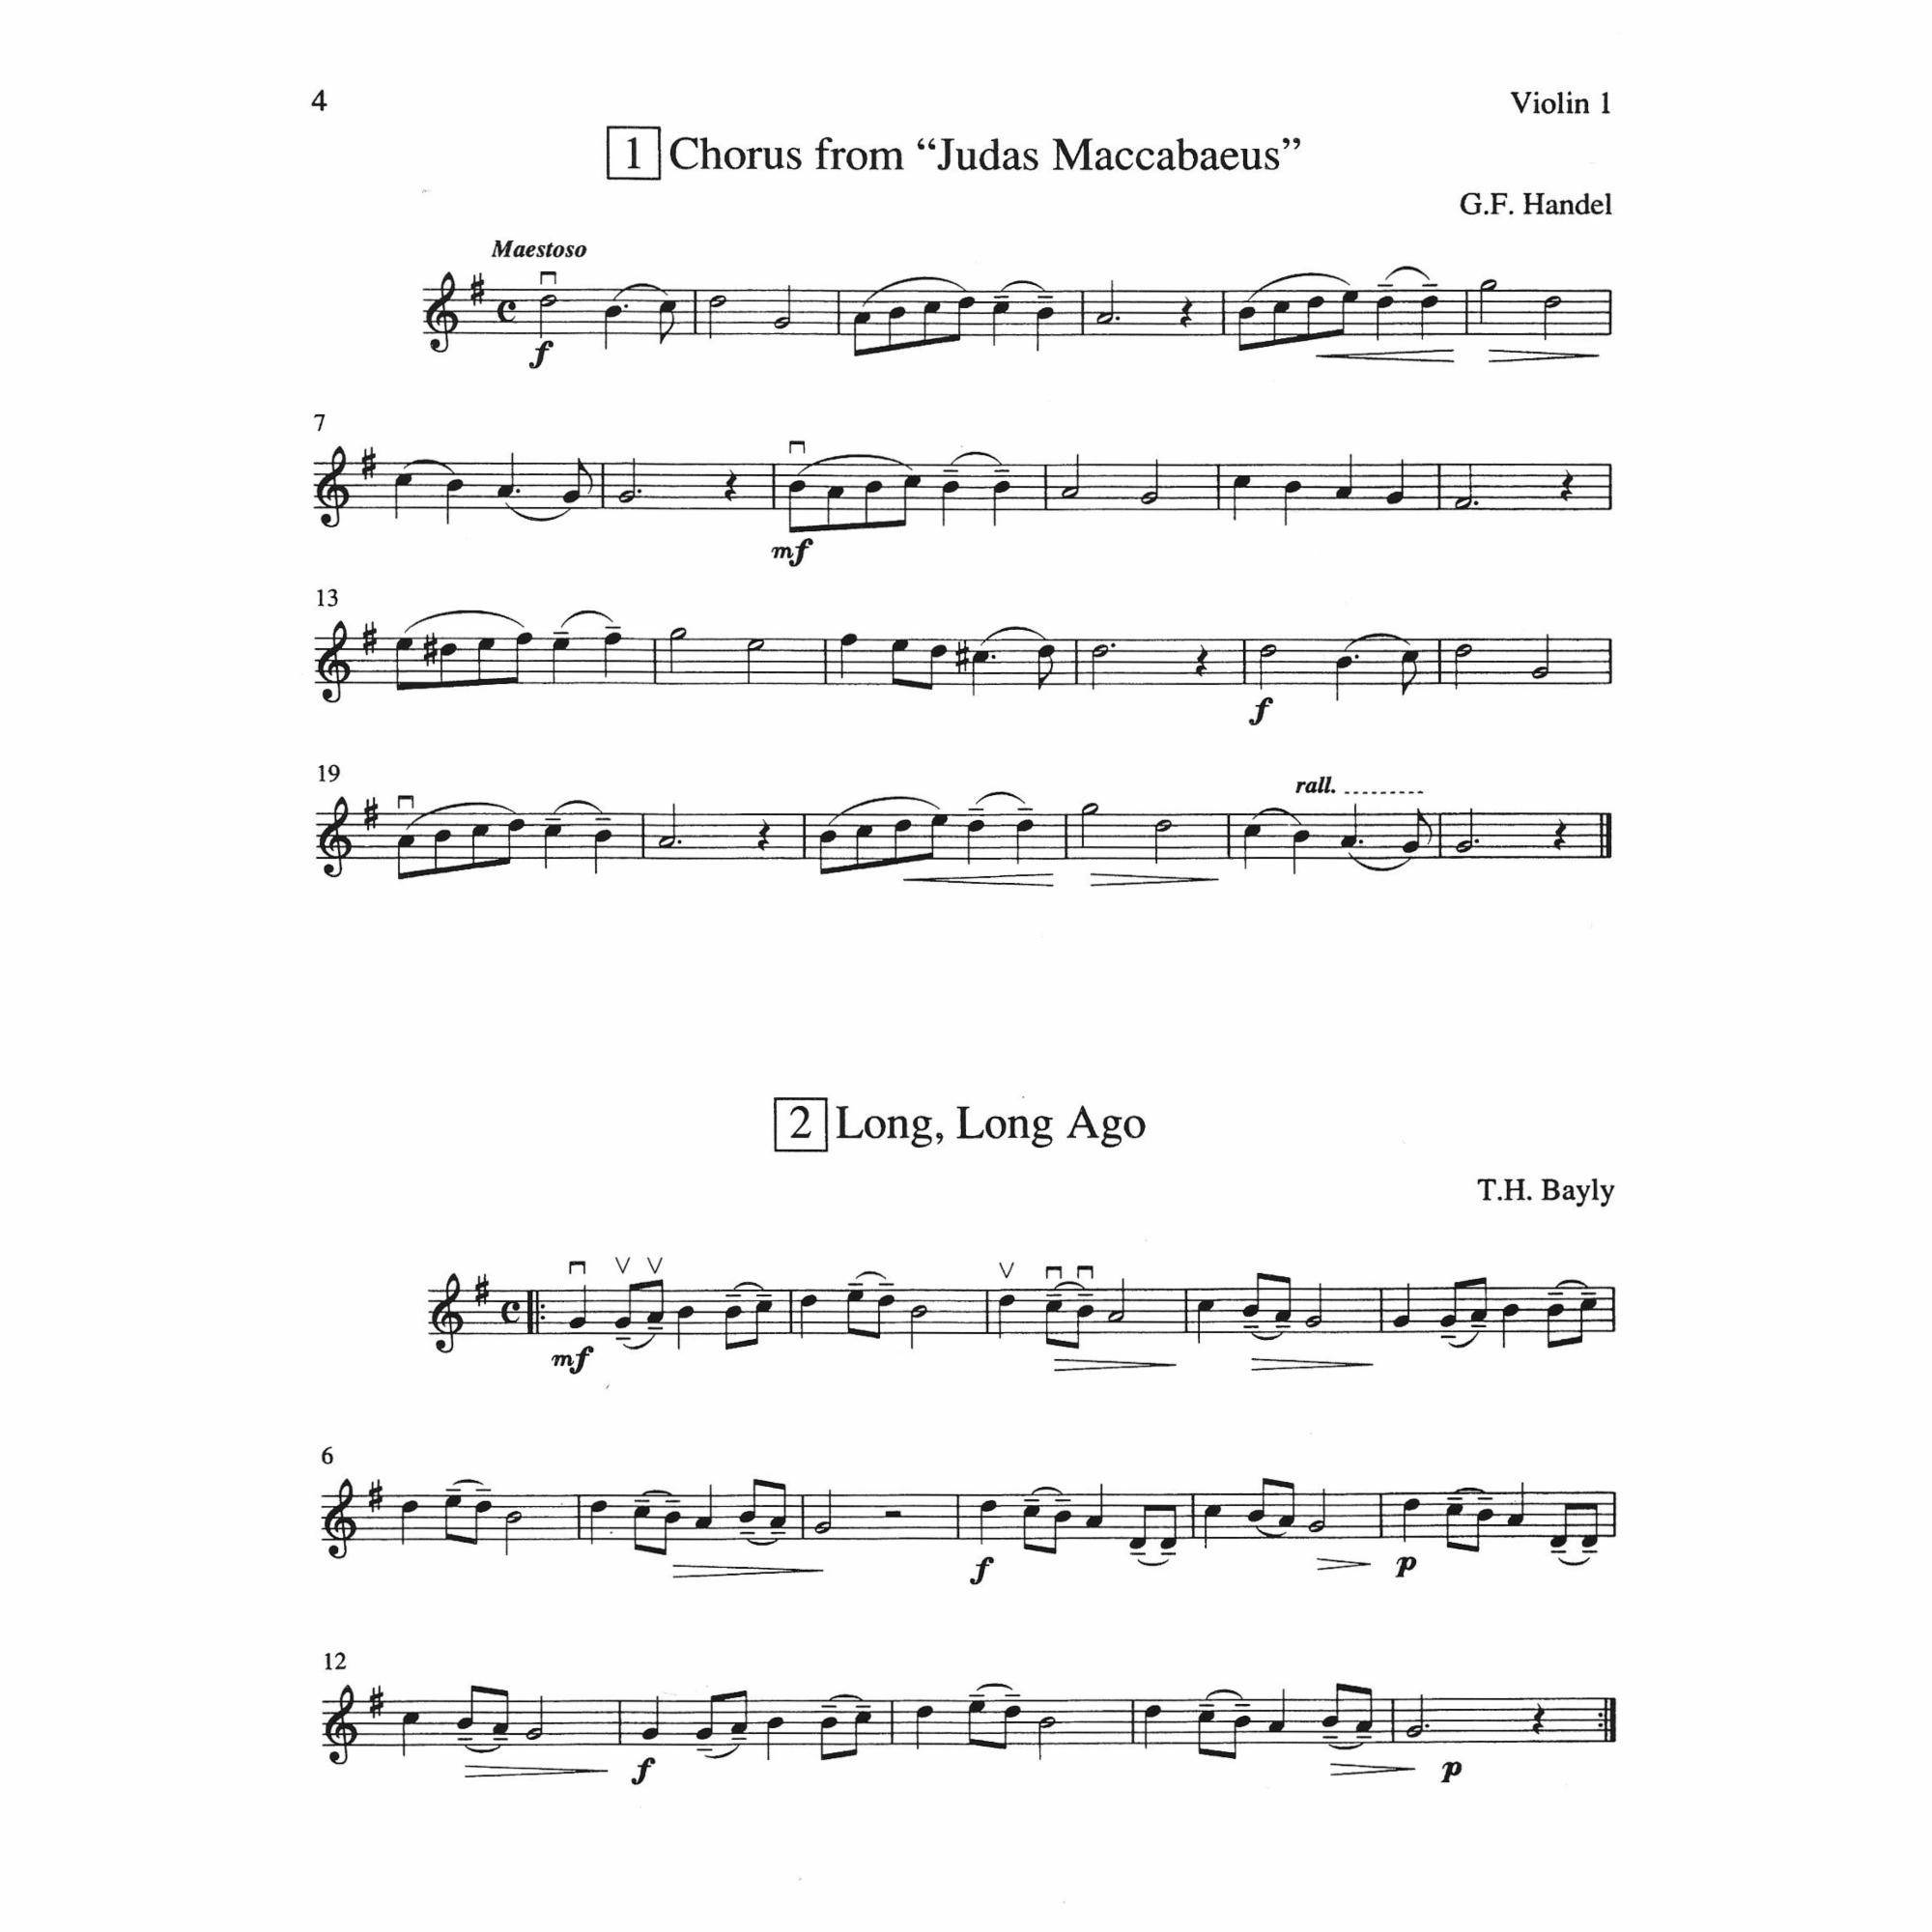 Sample: Vol. 2, Violin 1 (Pg. 4)